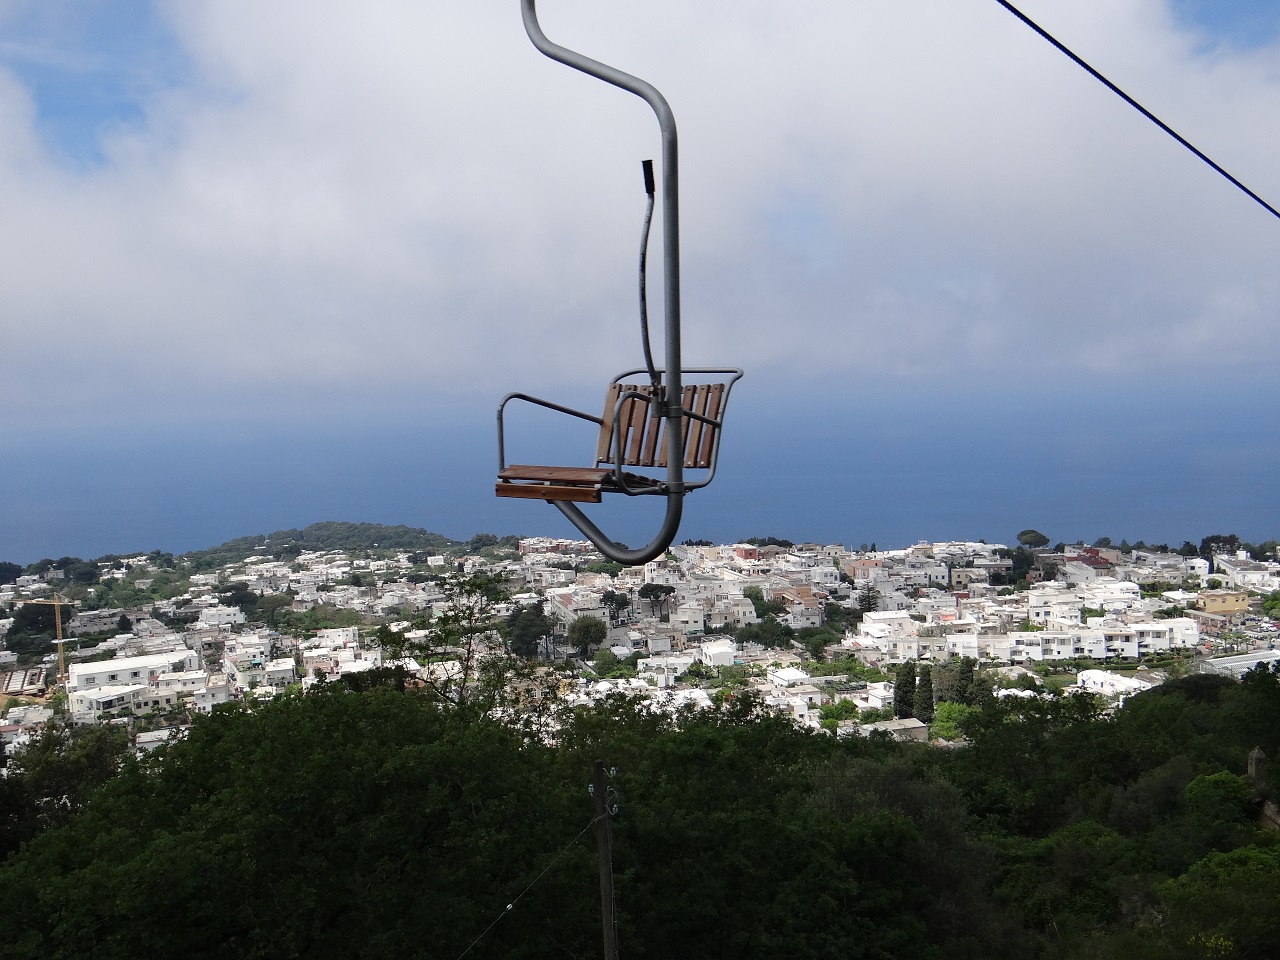 http://philatravelgirl.com/wp-content/uploads/2015/08/Anacapri-chair-lift-view.jpg